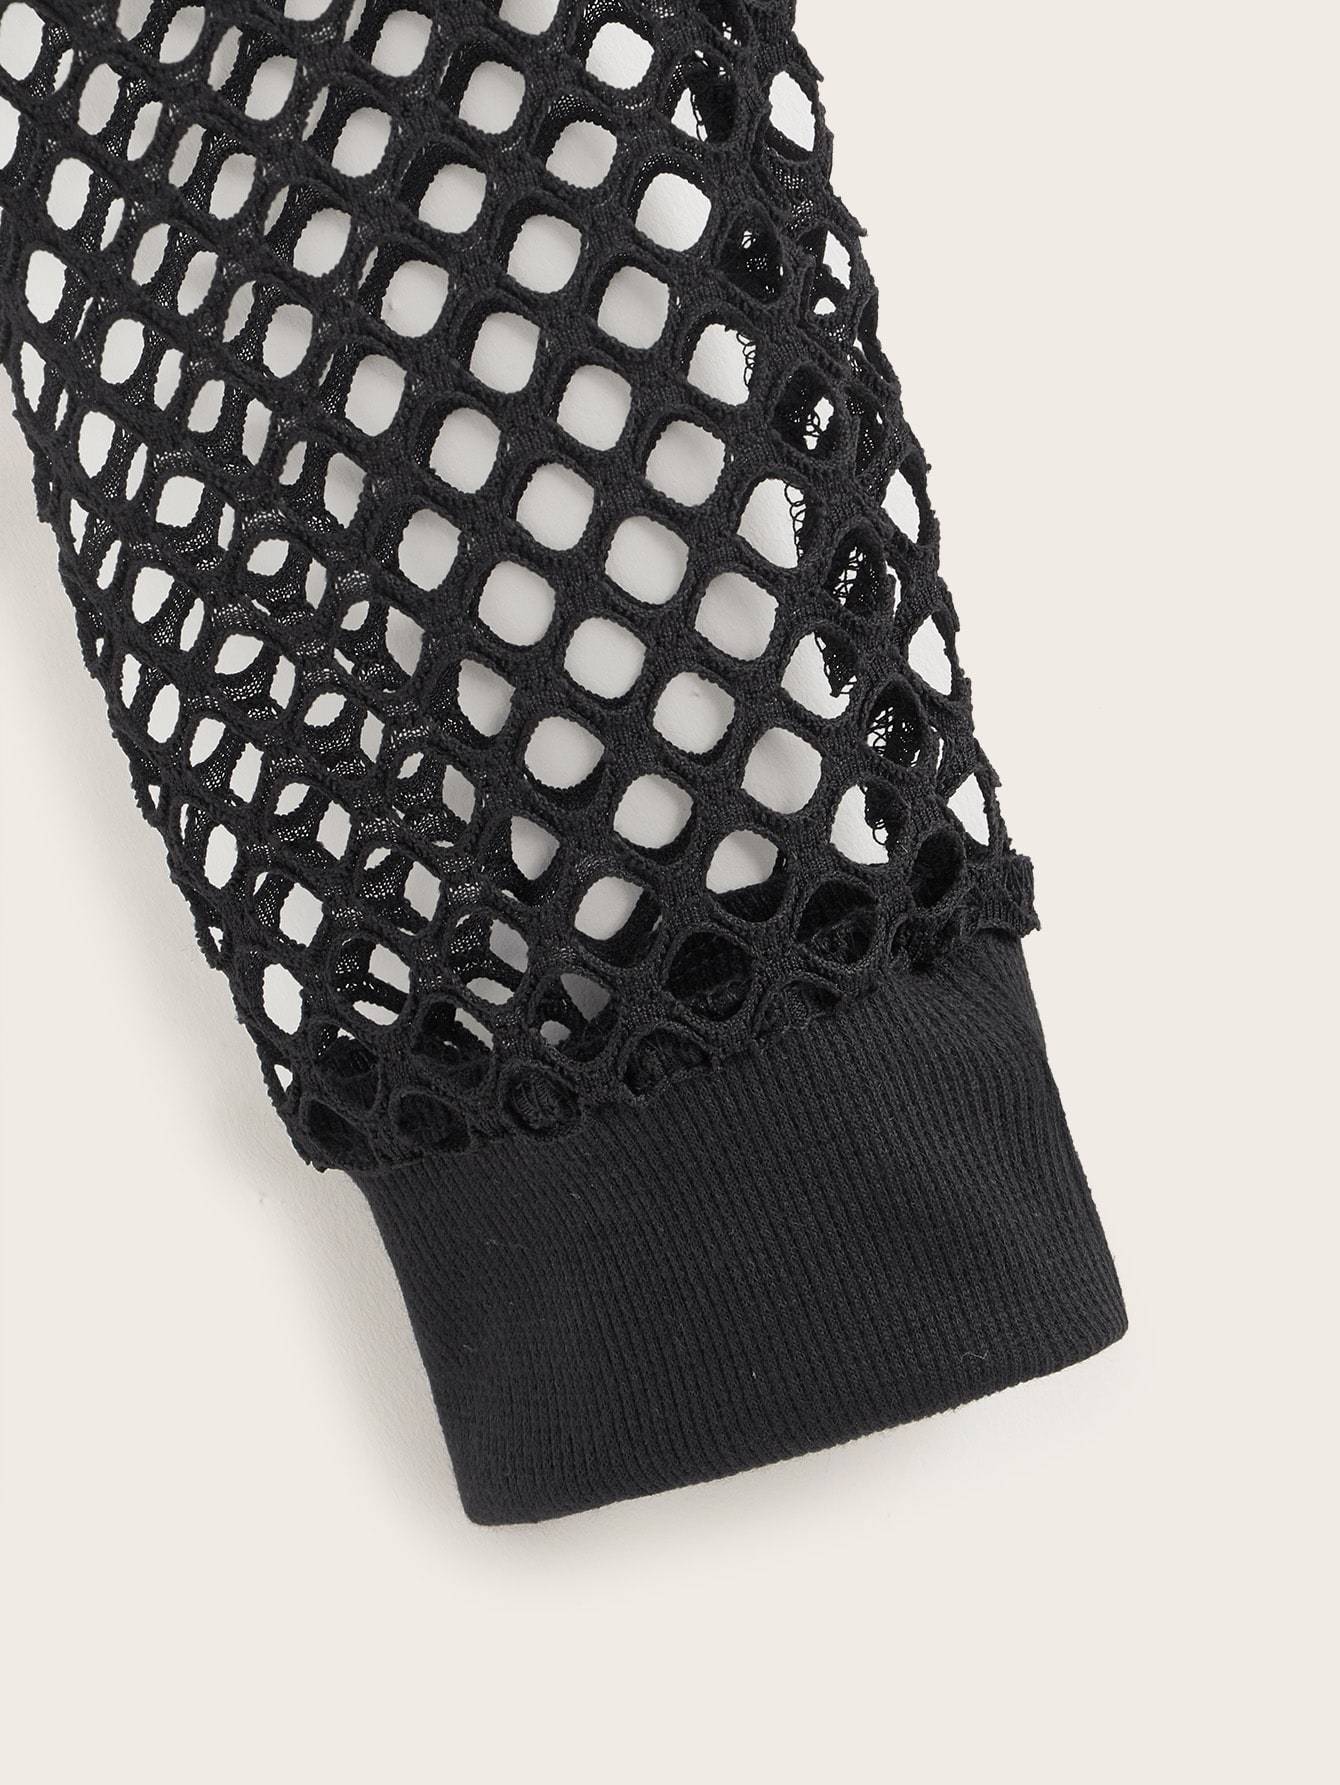 Fishnet Drawstring Hooded Sweatshirt - INS | Online Fashion Free Shipping Clothing, Dresses, Tops, Shoes